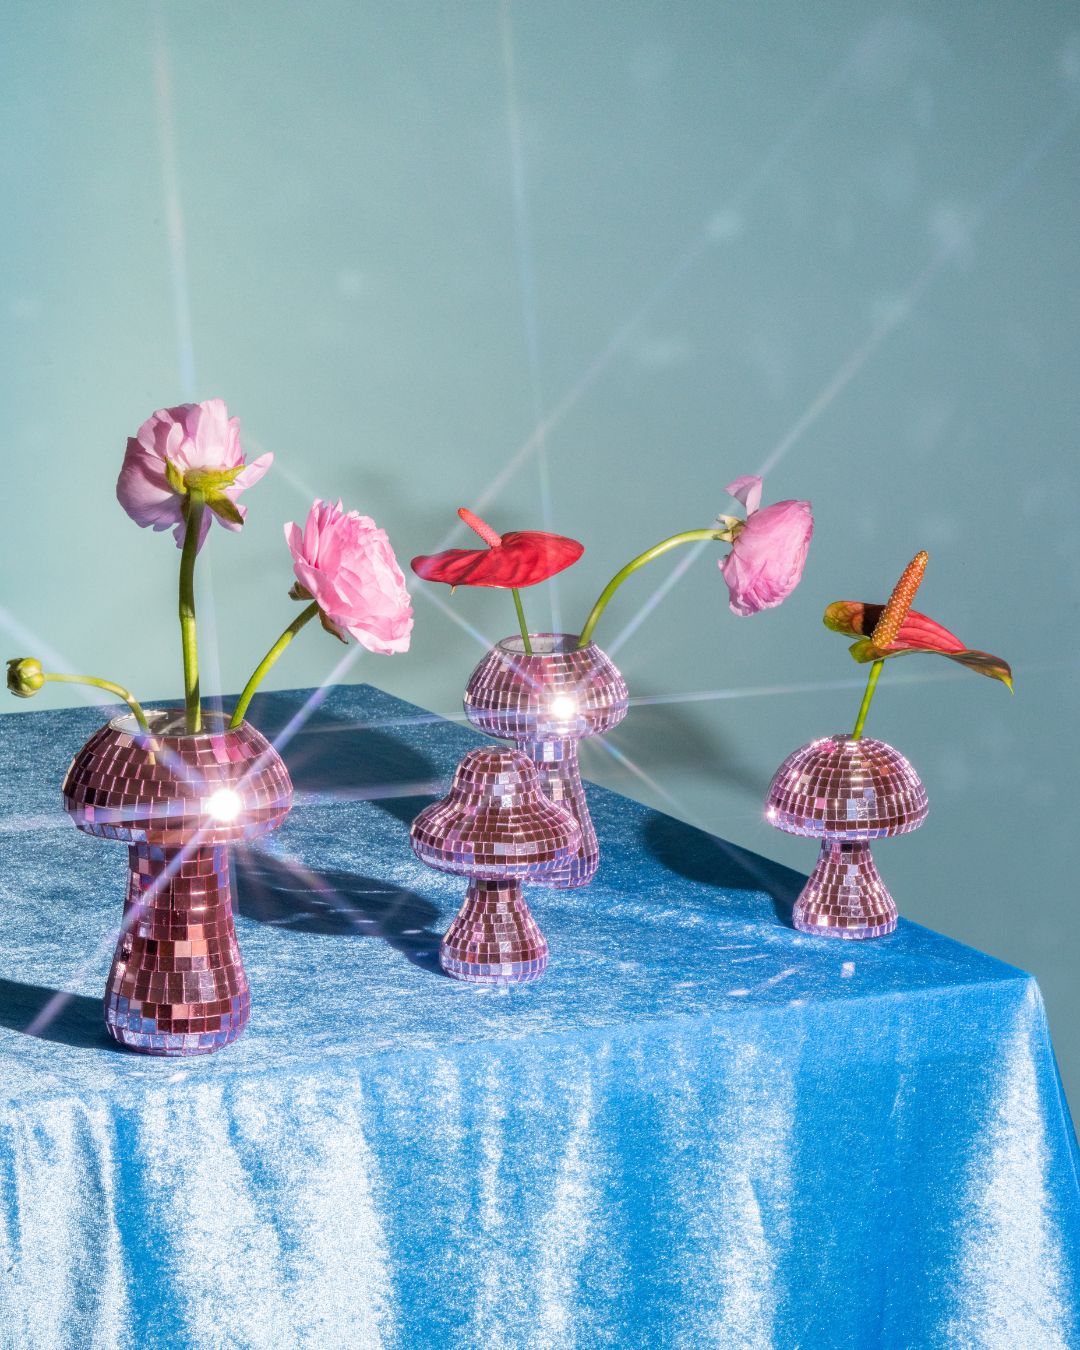 Mushroom Disco Vase - Pink